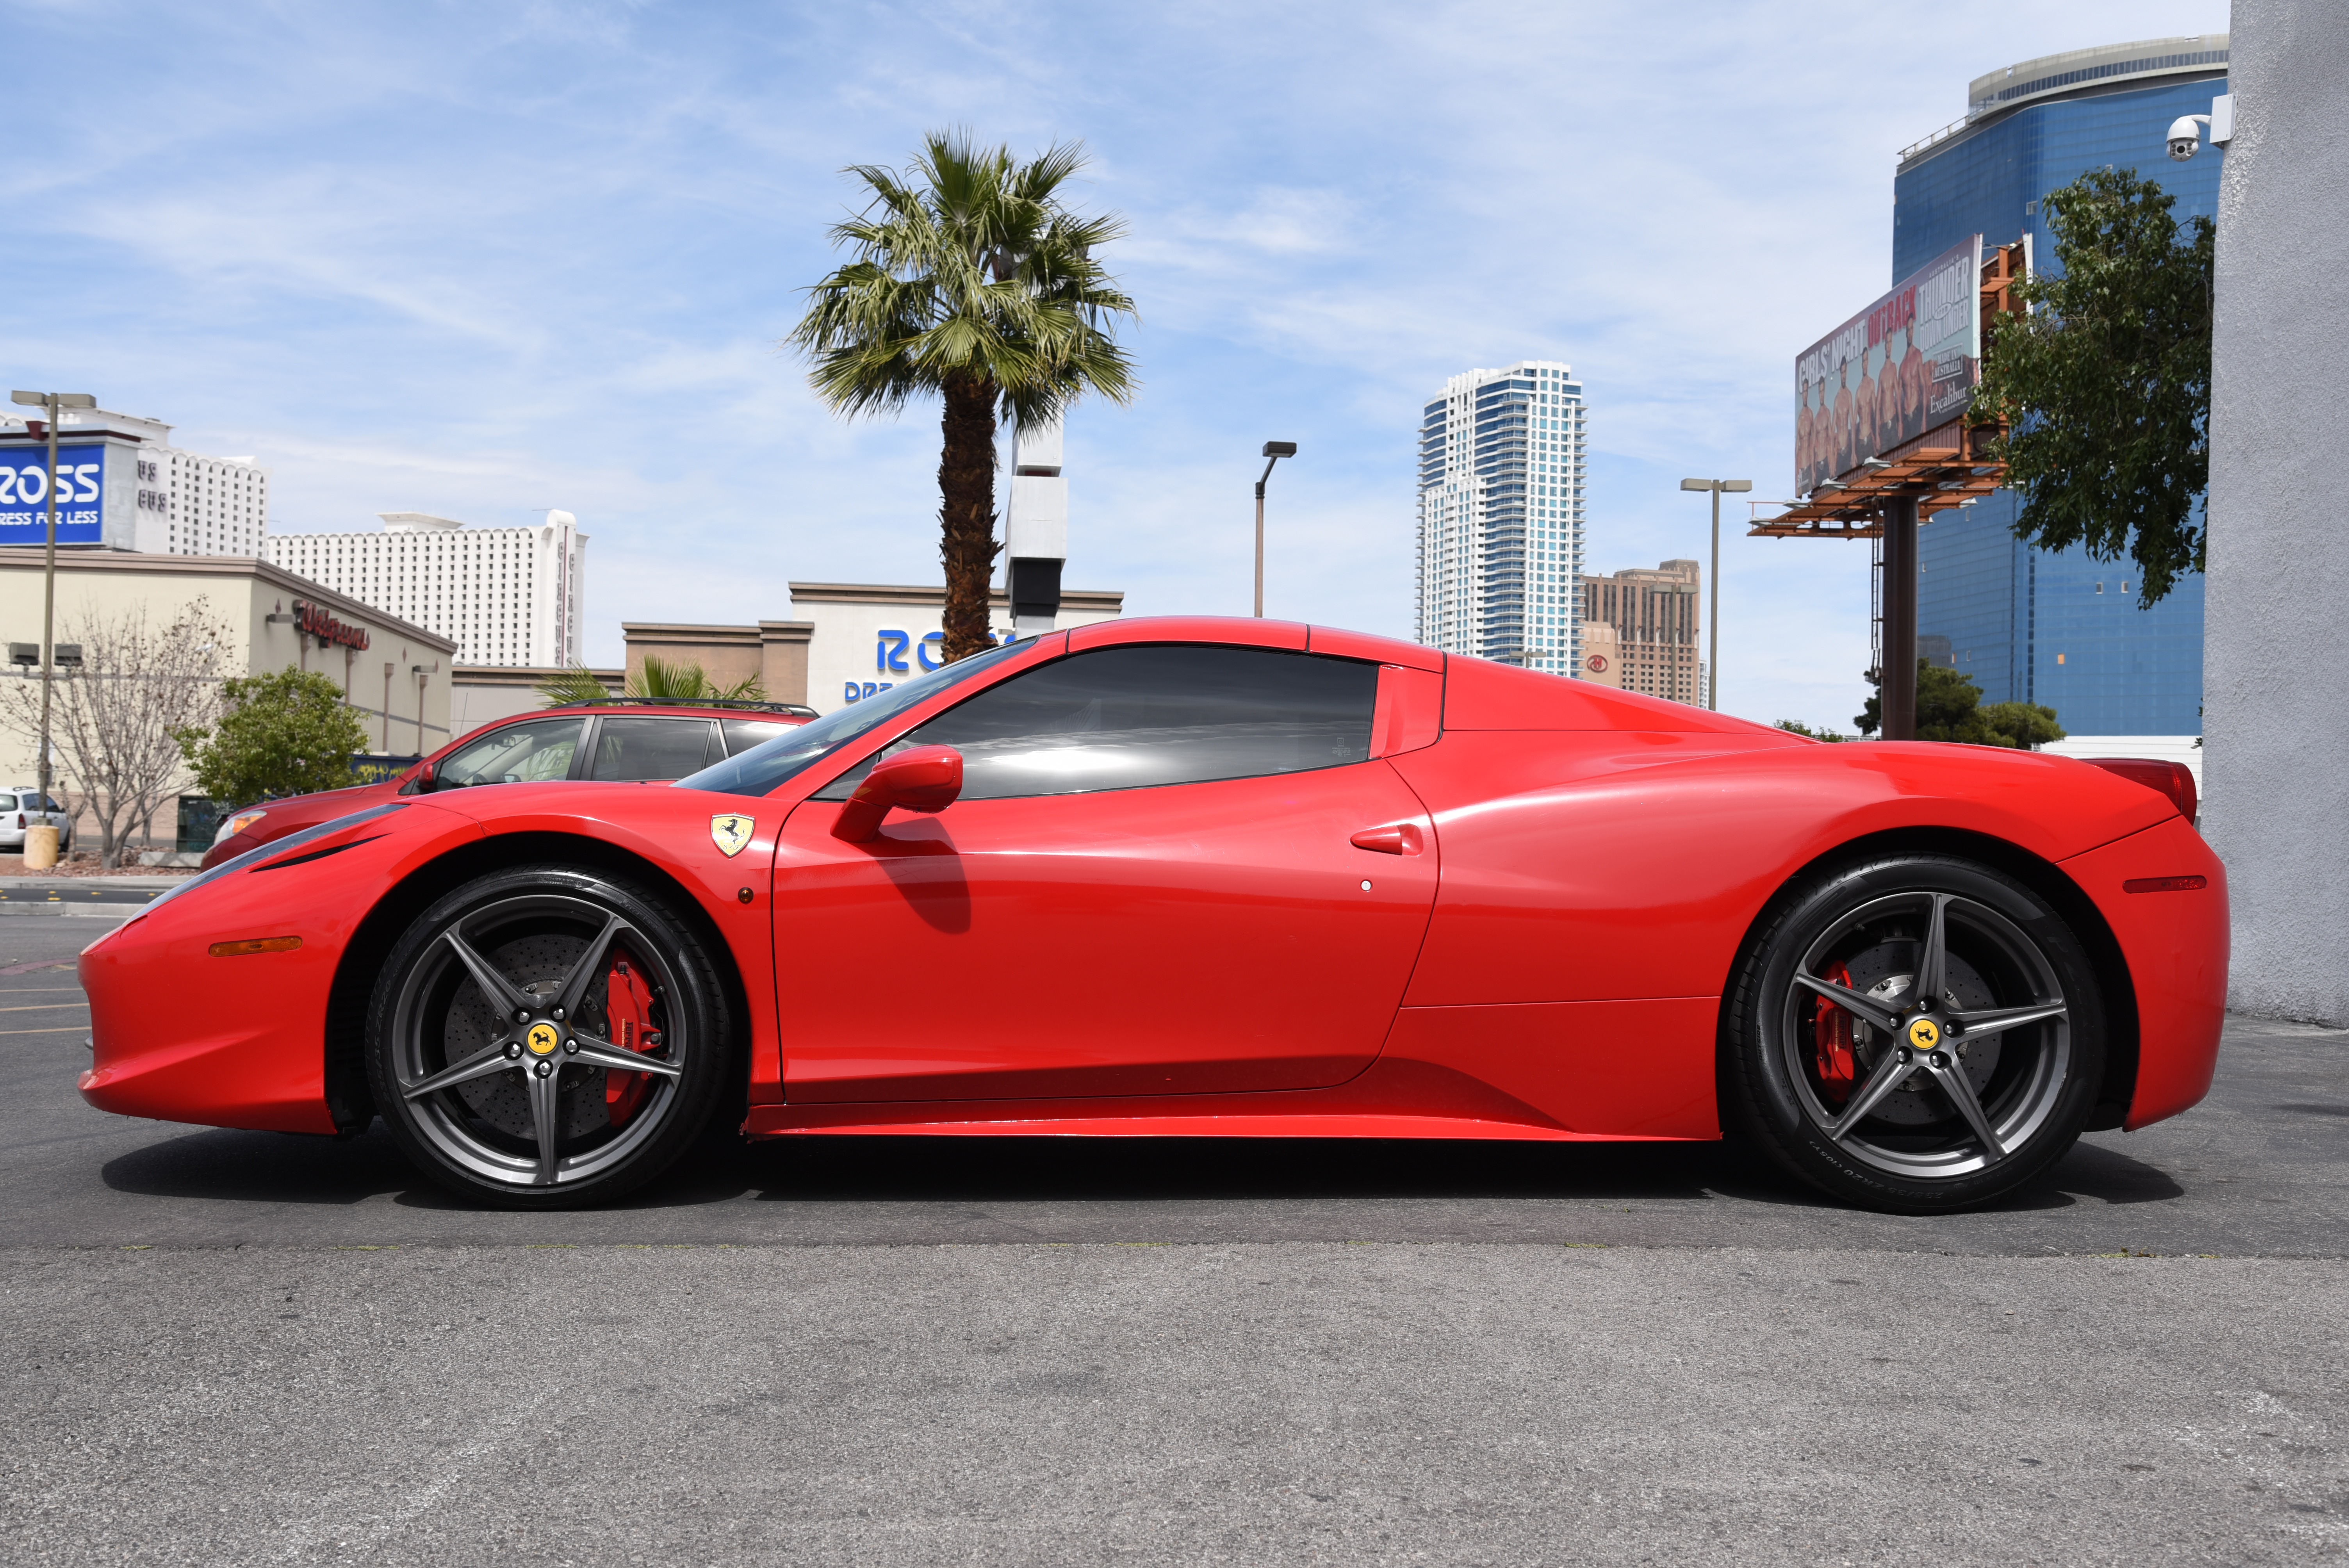 Ferrari Convertible / 2016 Ferrari California T Convertible Pricing